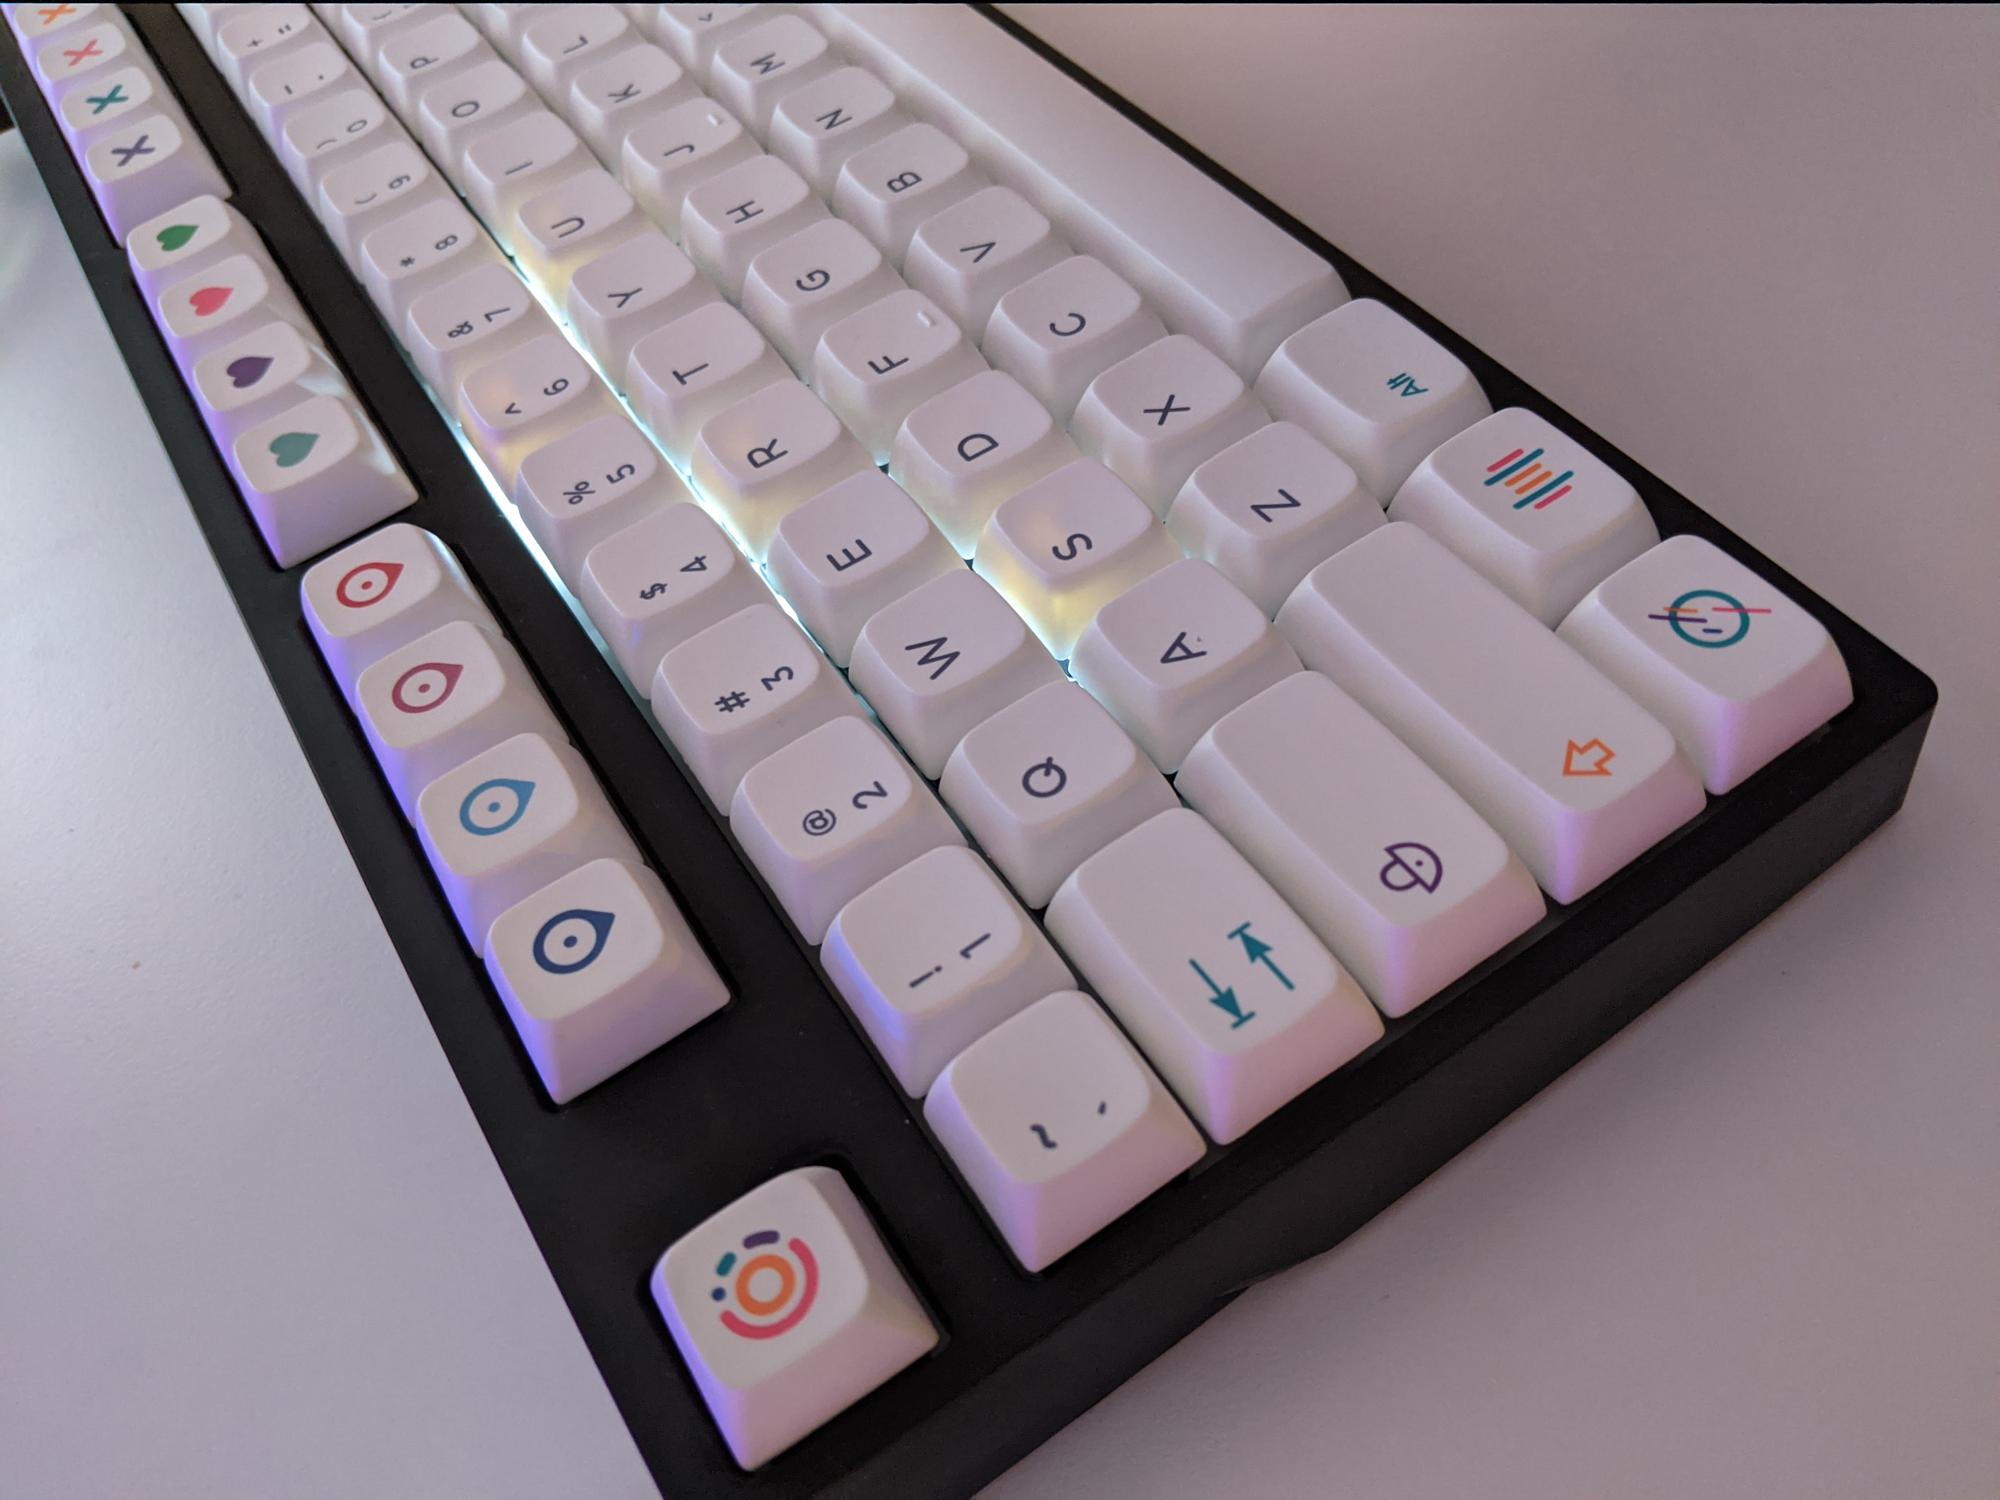 Arty shot of pretty keyboard